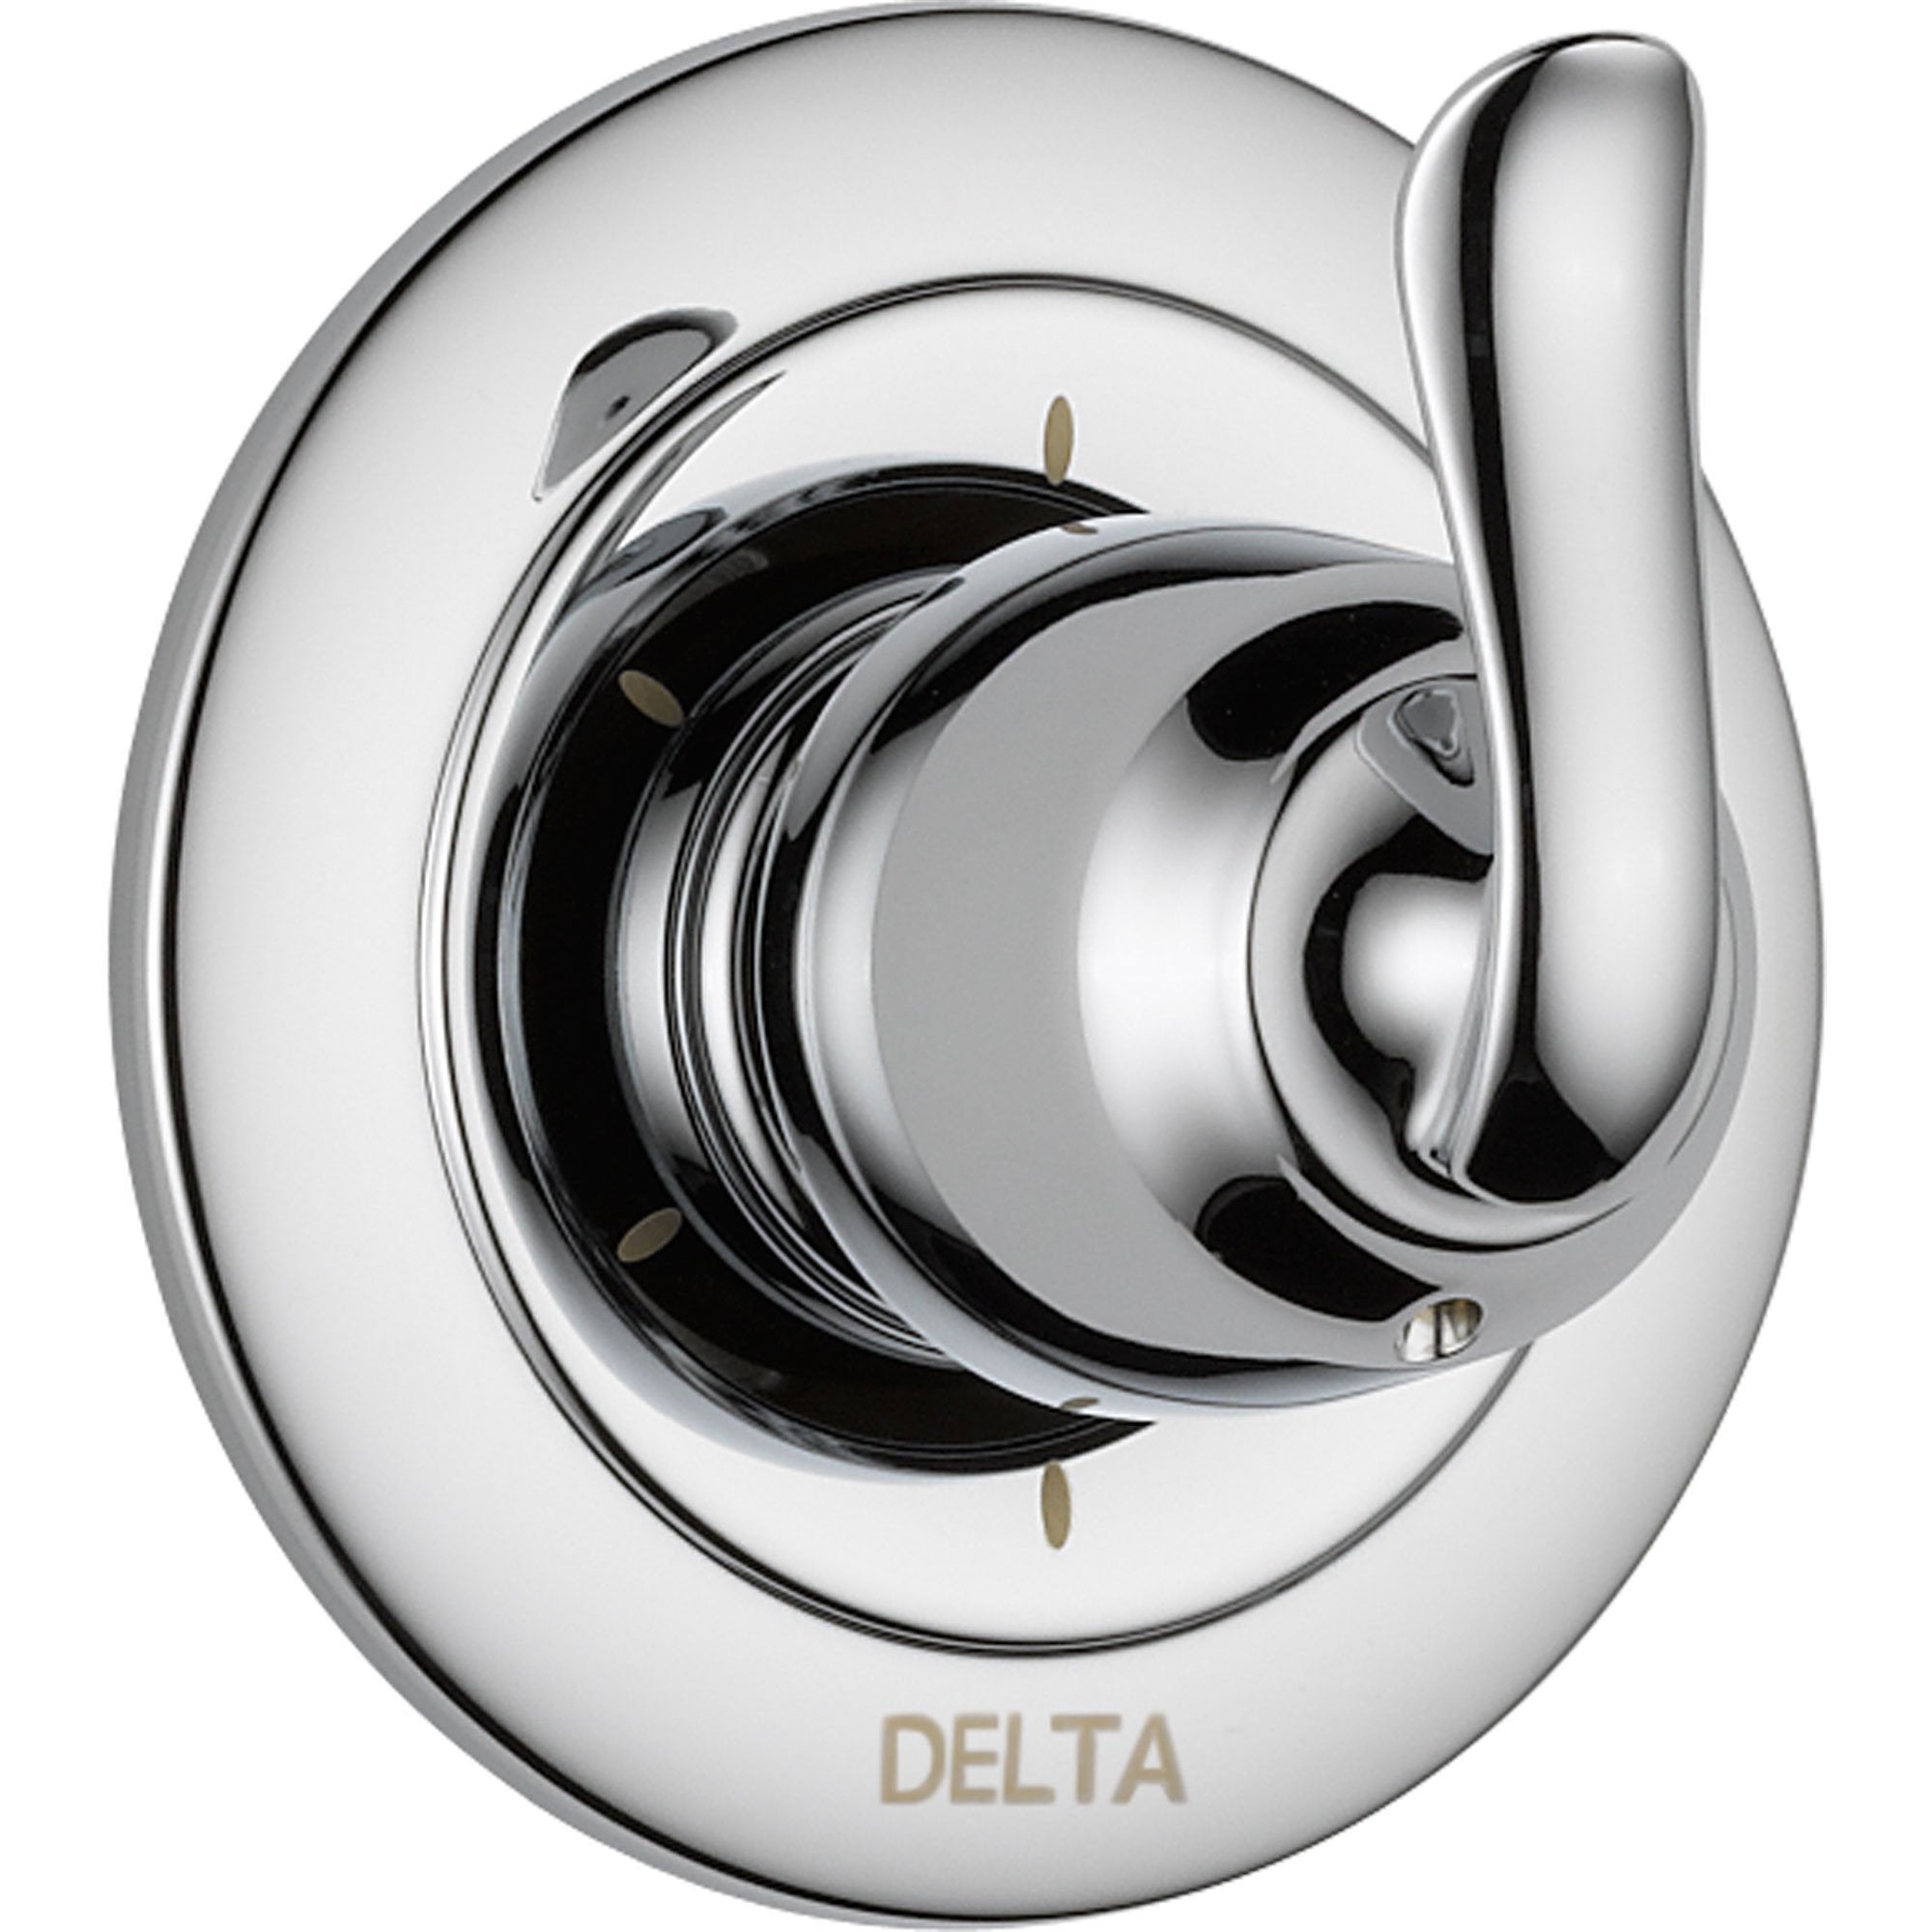 Delta Linden 6-Setting Chrome Single Handle Shower Diverter Trim Kit 555684